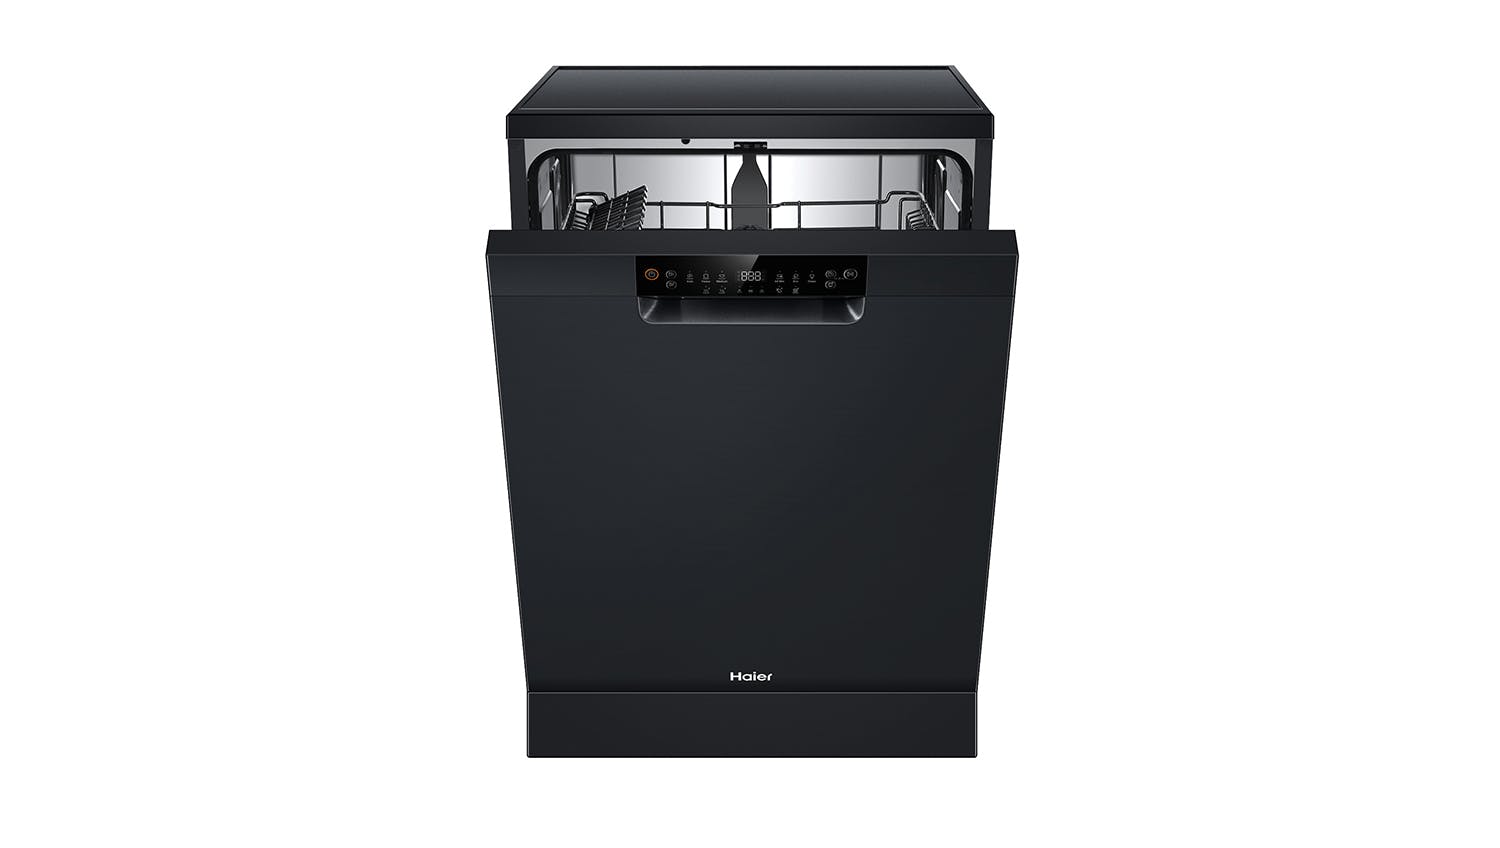 Haier 15 Place Setting 6 Program Freestanding Dishwasher - Black (HDW15F2B1)